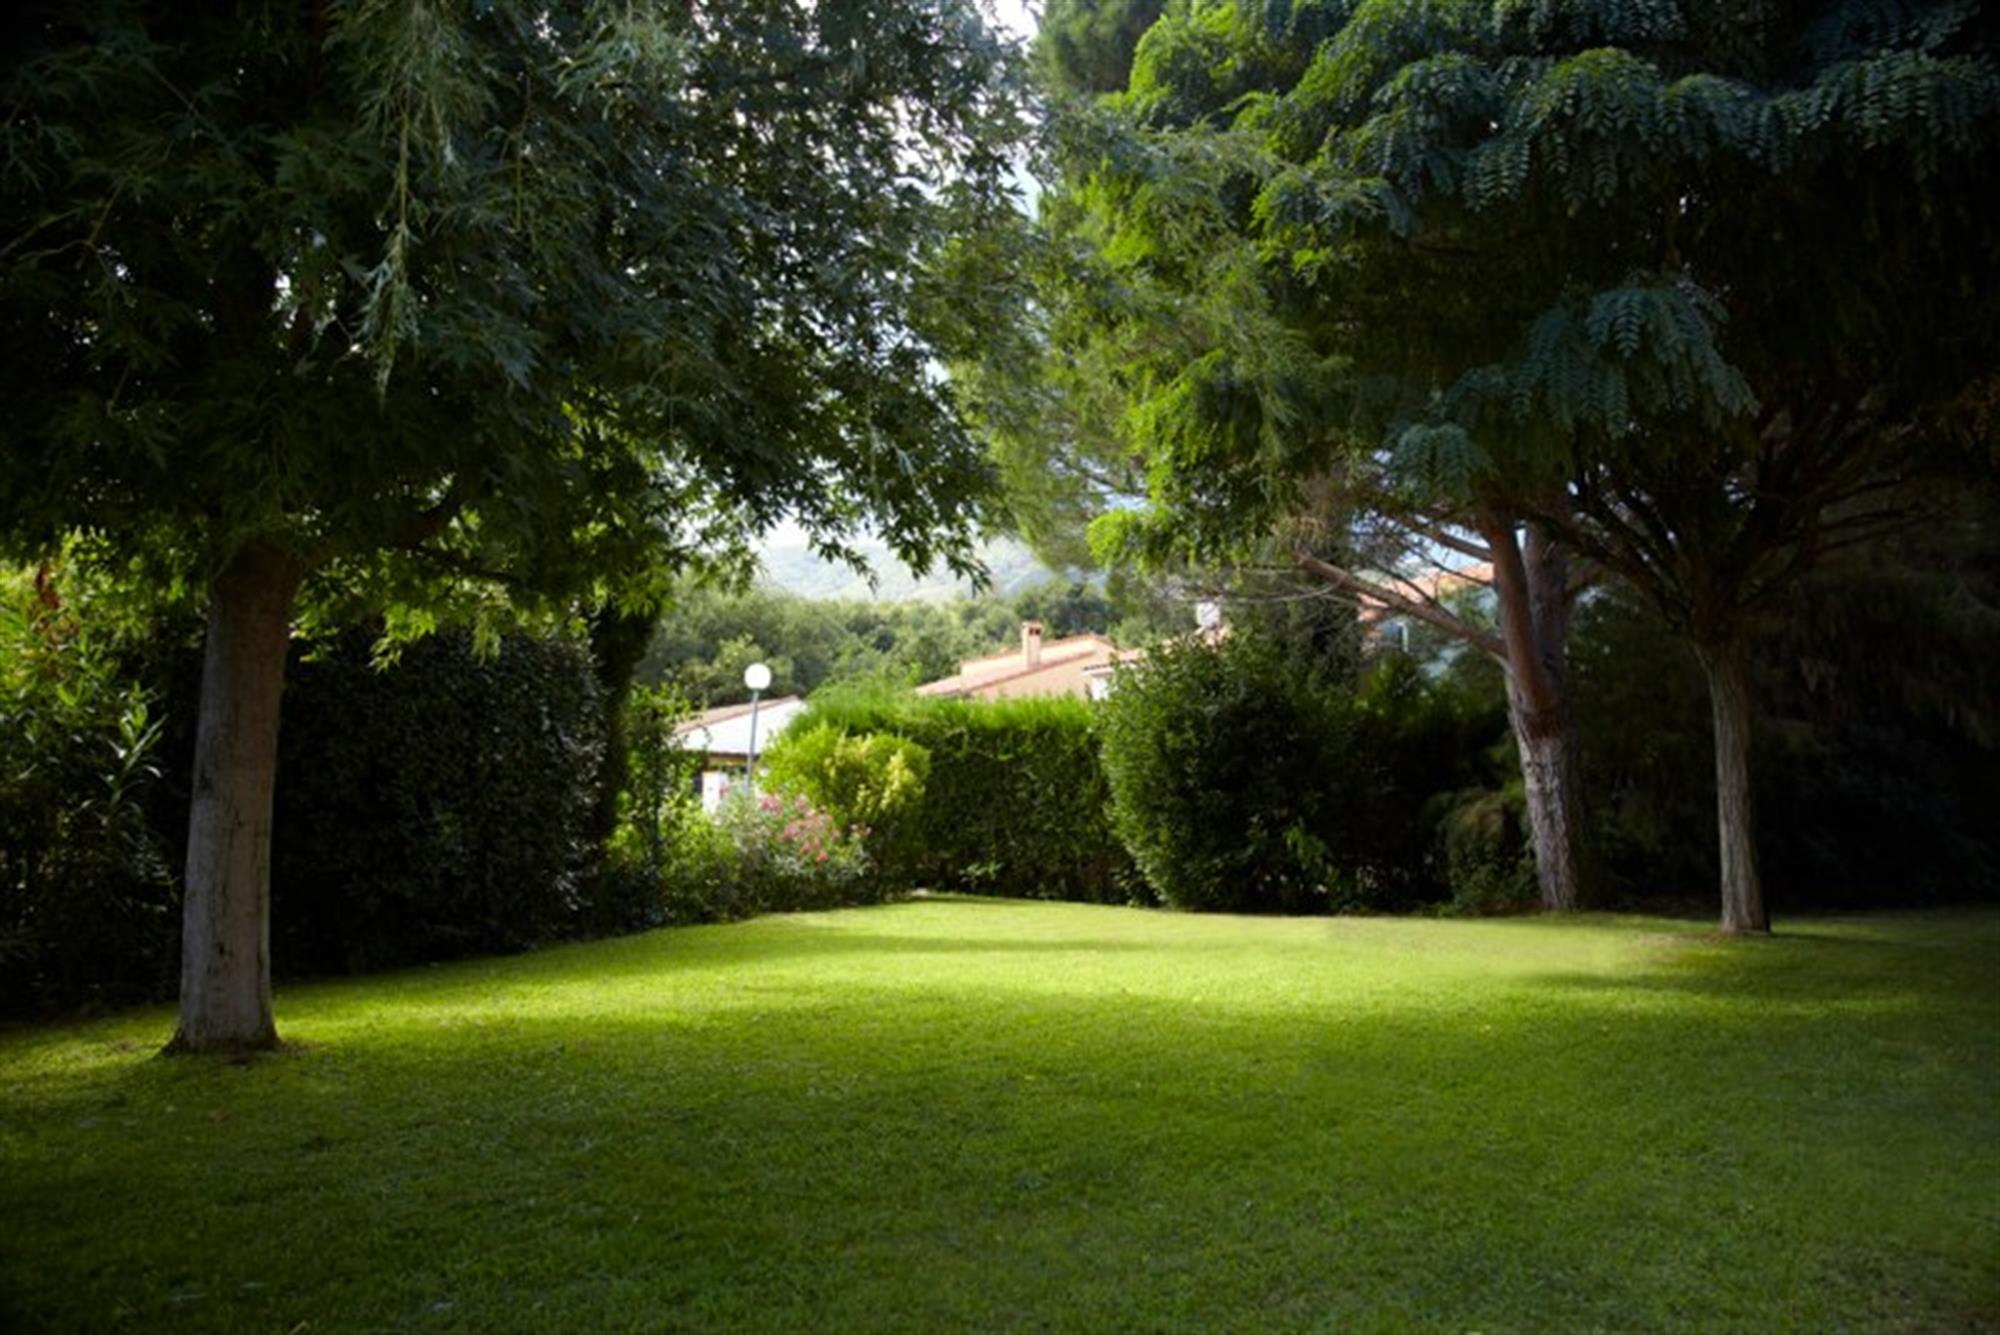 Villa i syd Frankrike - nydelig hage